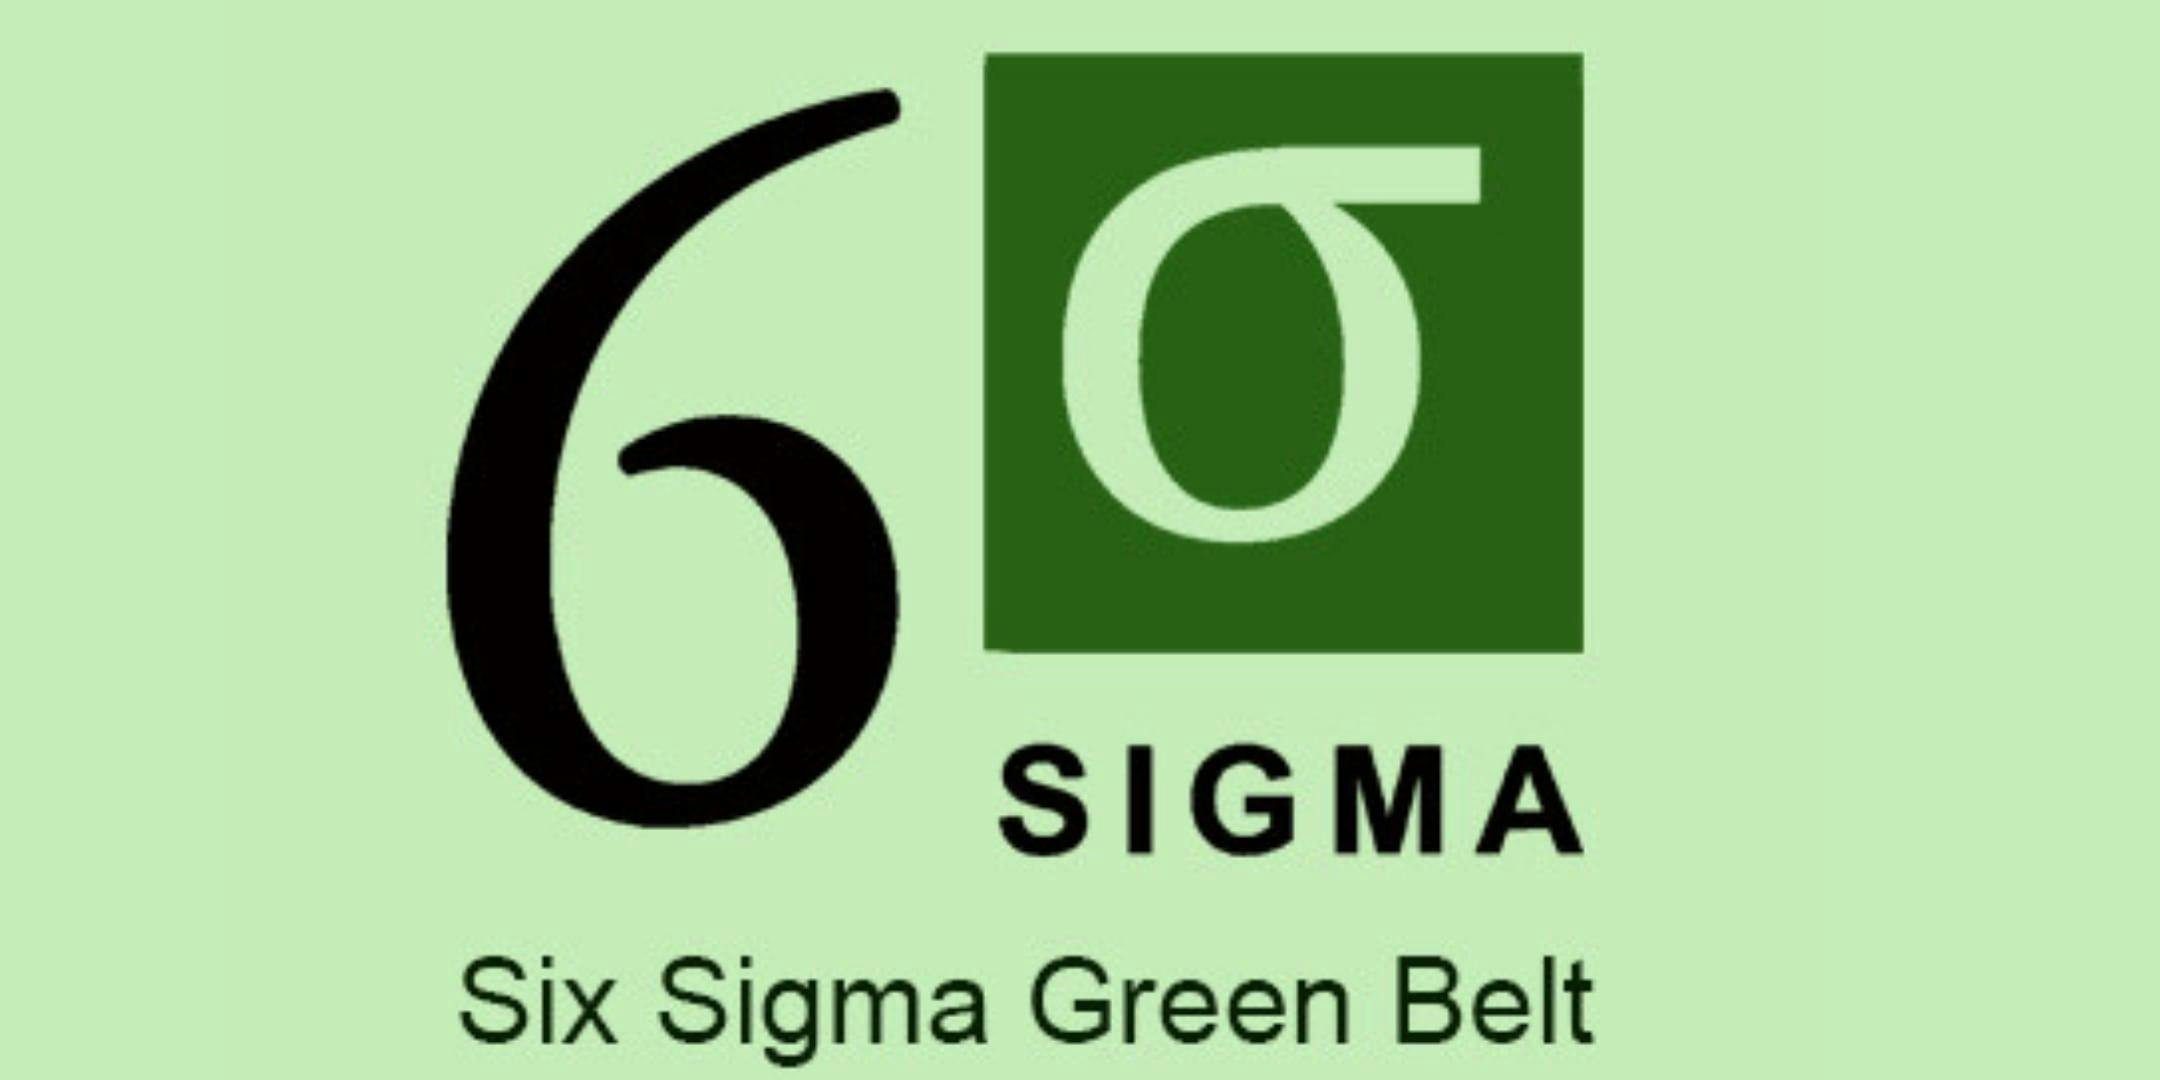 Lean Six Sigma Green Belt (LSSGB) Certification Training in Denver, CO